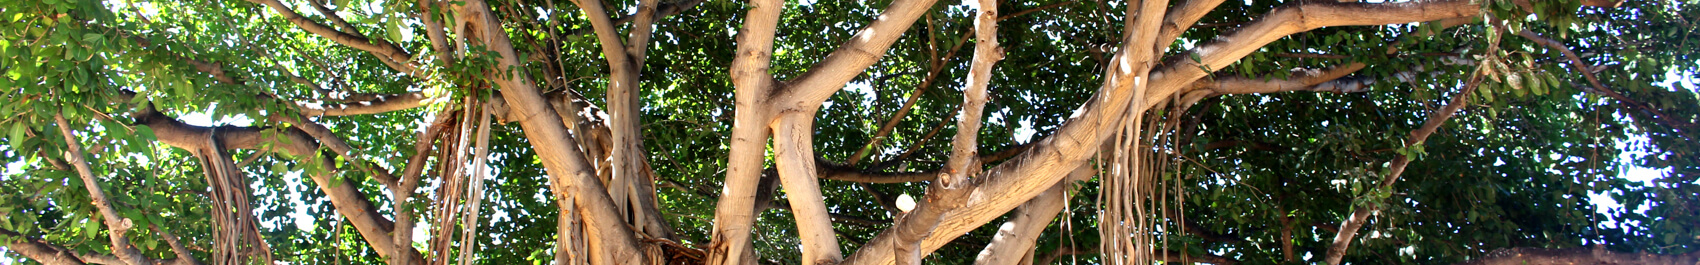 Lahaina Banyan tree in historical Lahaina Town